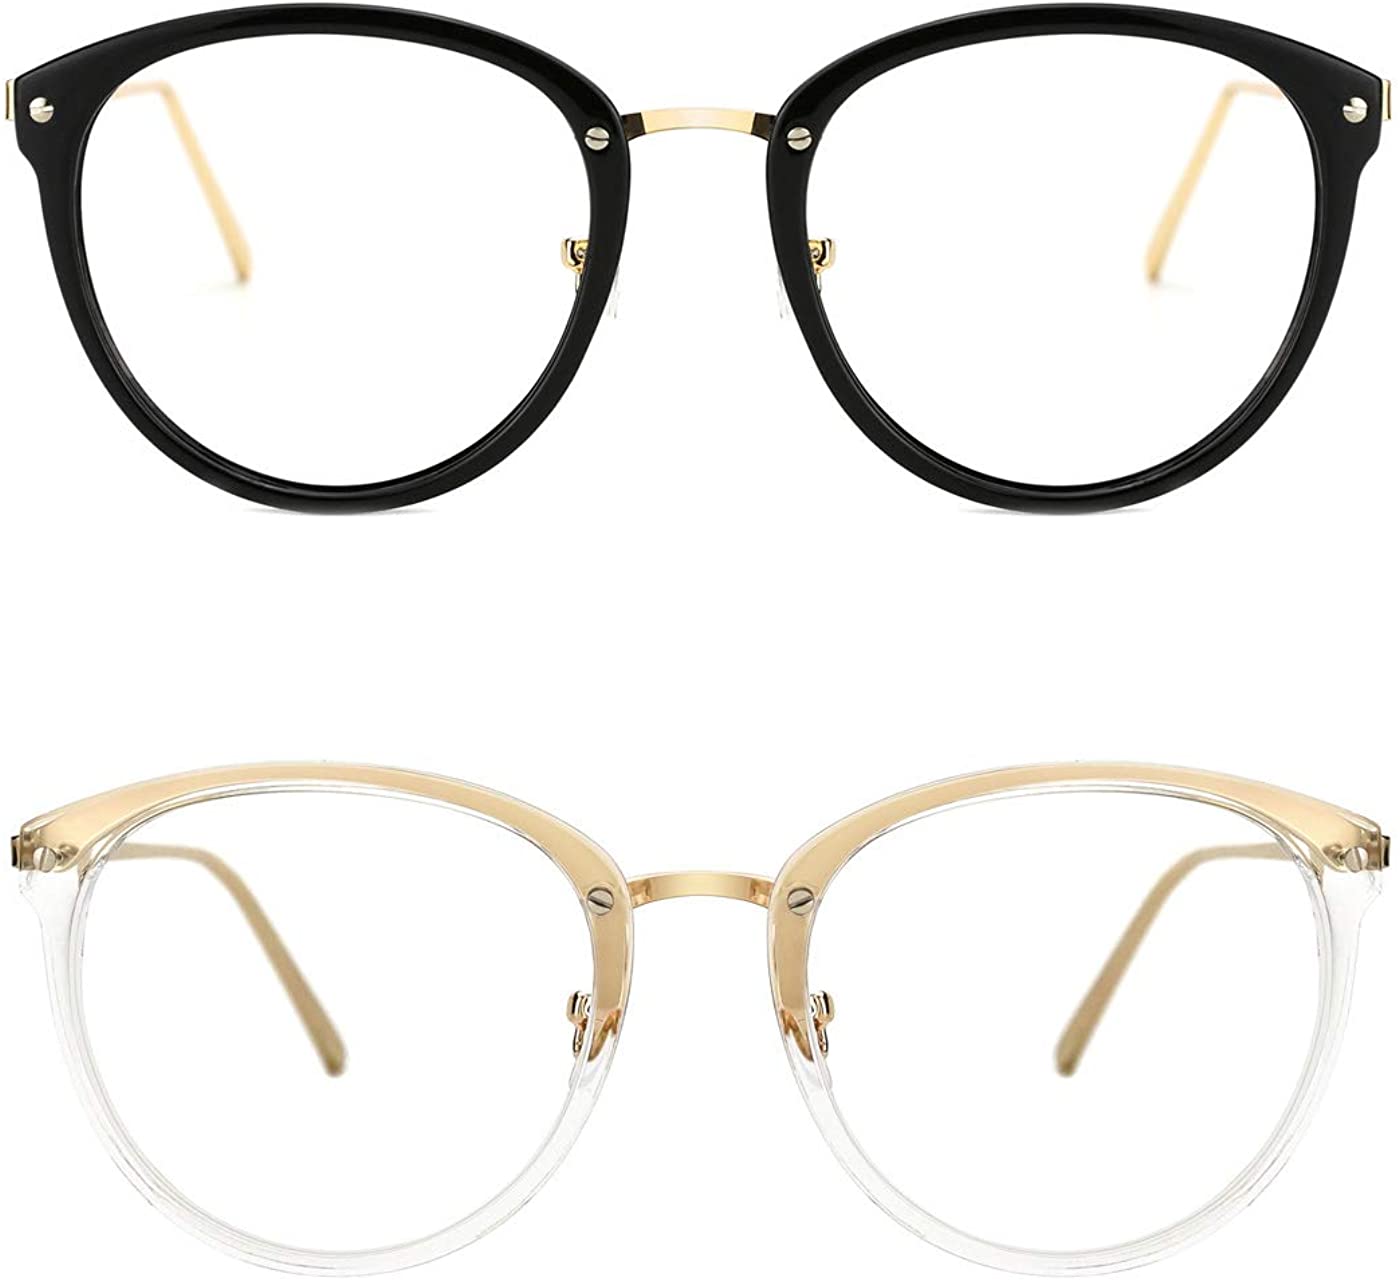 TIJN Non-prescription Glasses Vintage Round Metal Frame for Women Men Clear Lens Eyeglasses 